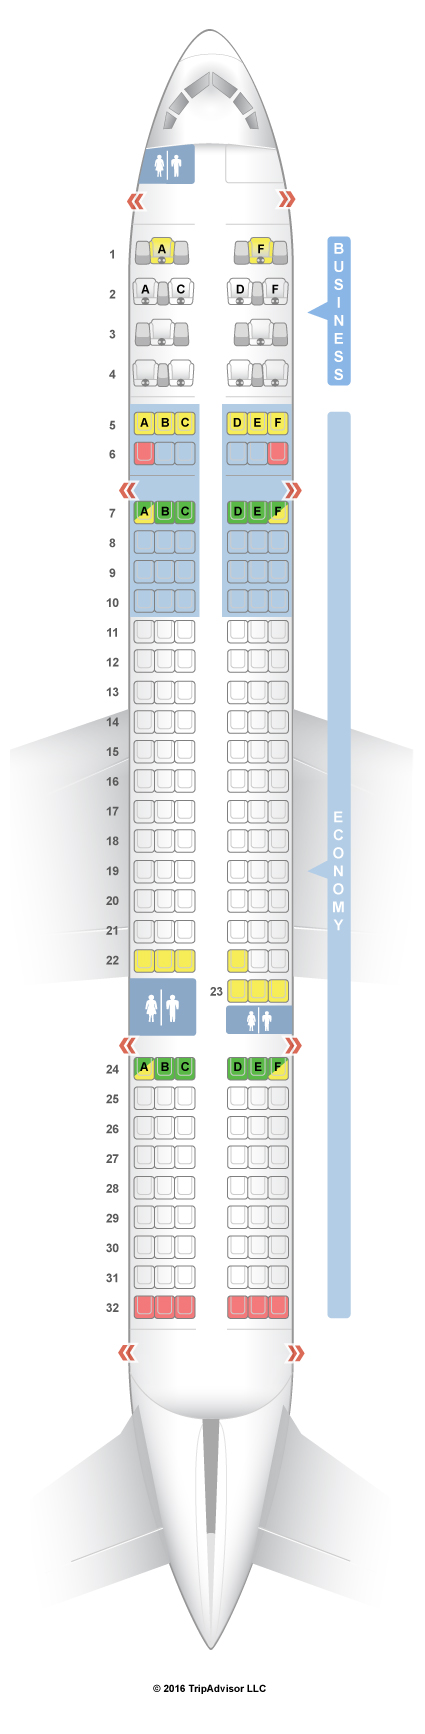 Seatguru Seat Map Aer Lingus Seatguru Seating Charts Seatguru Chart ...